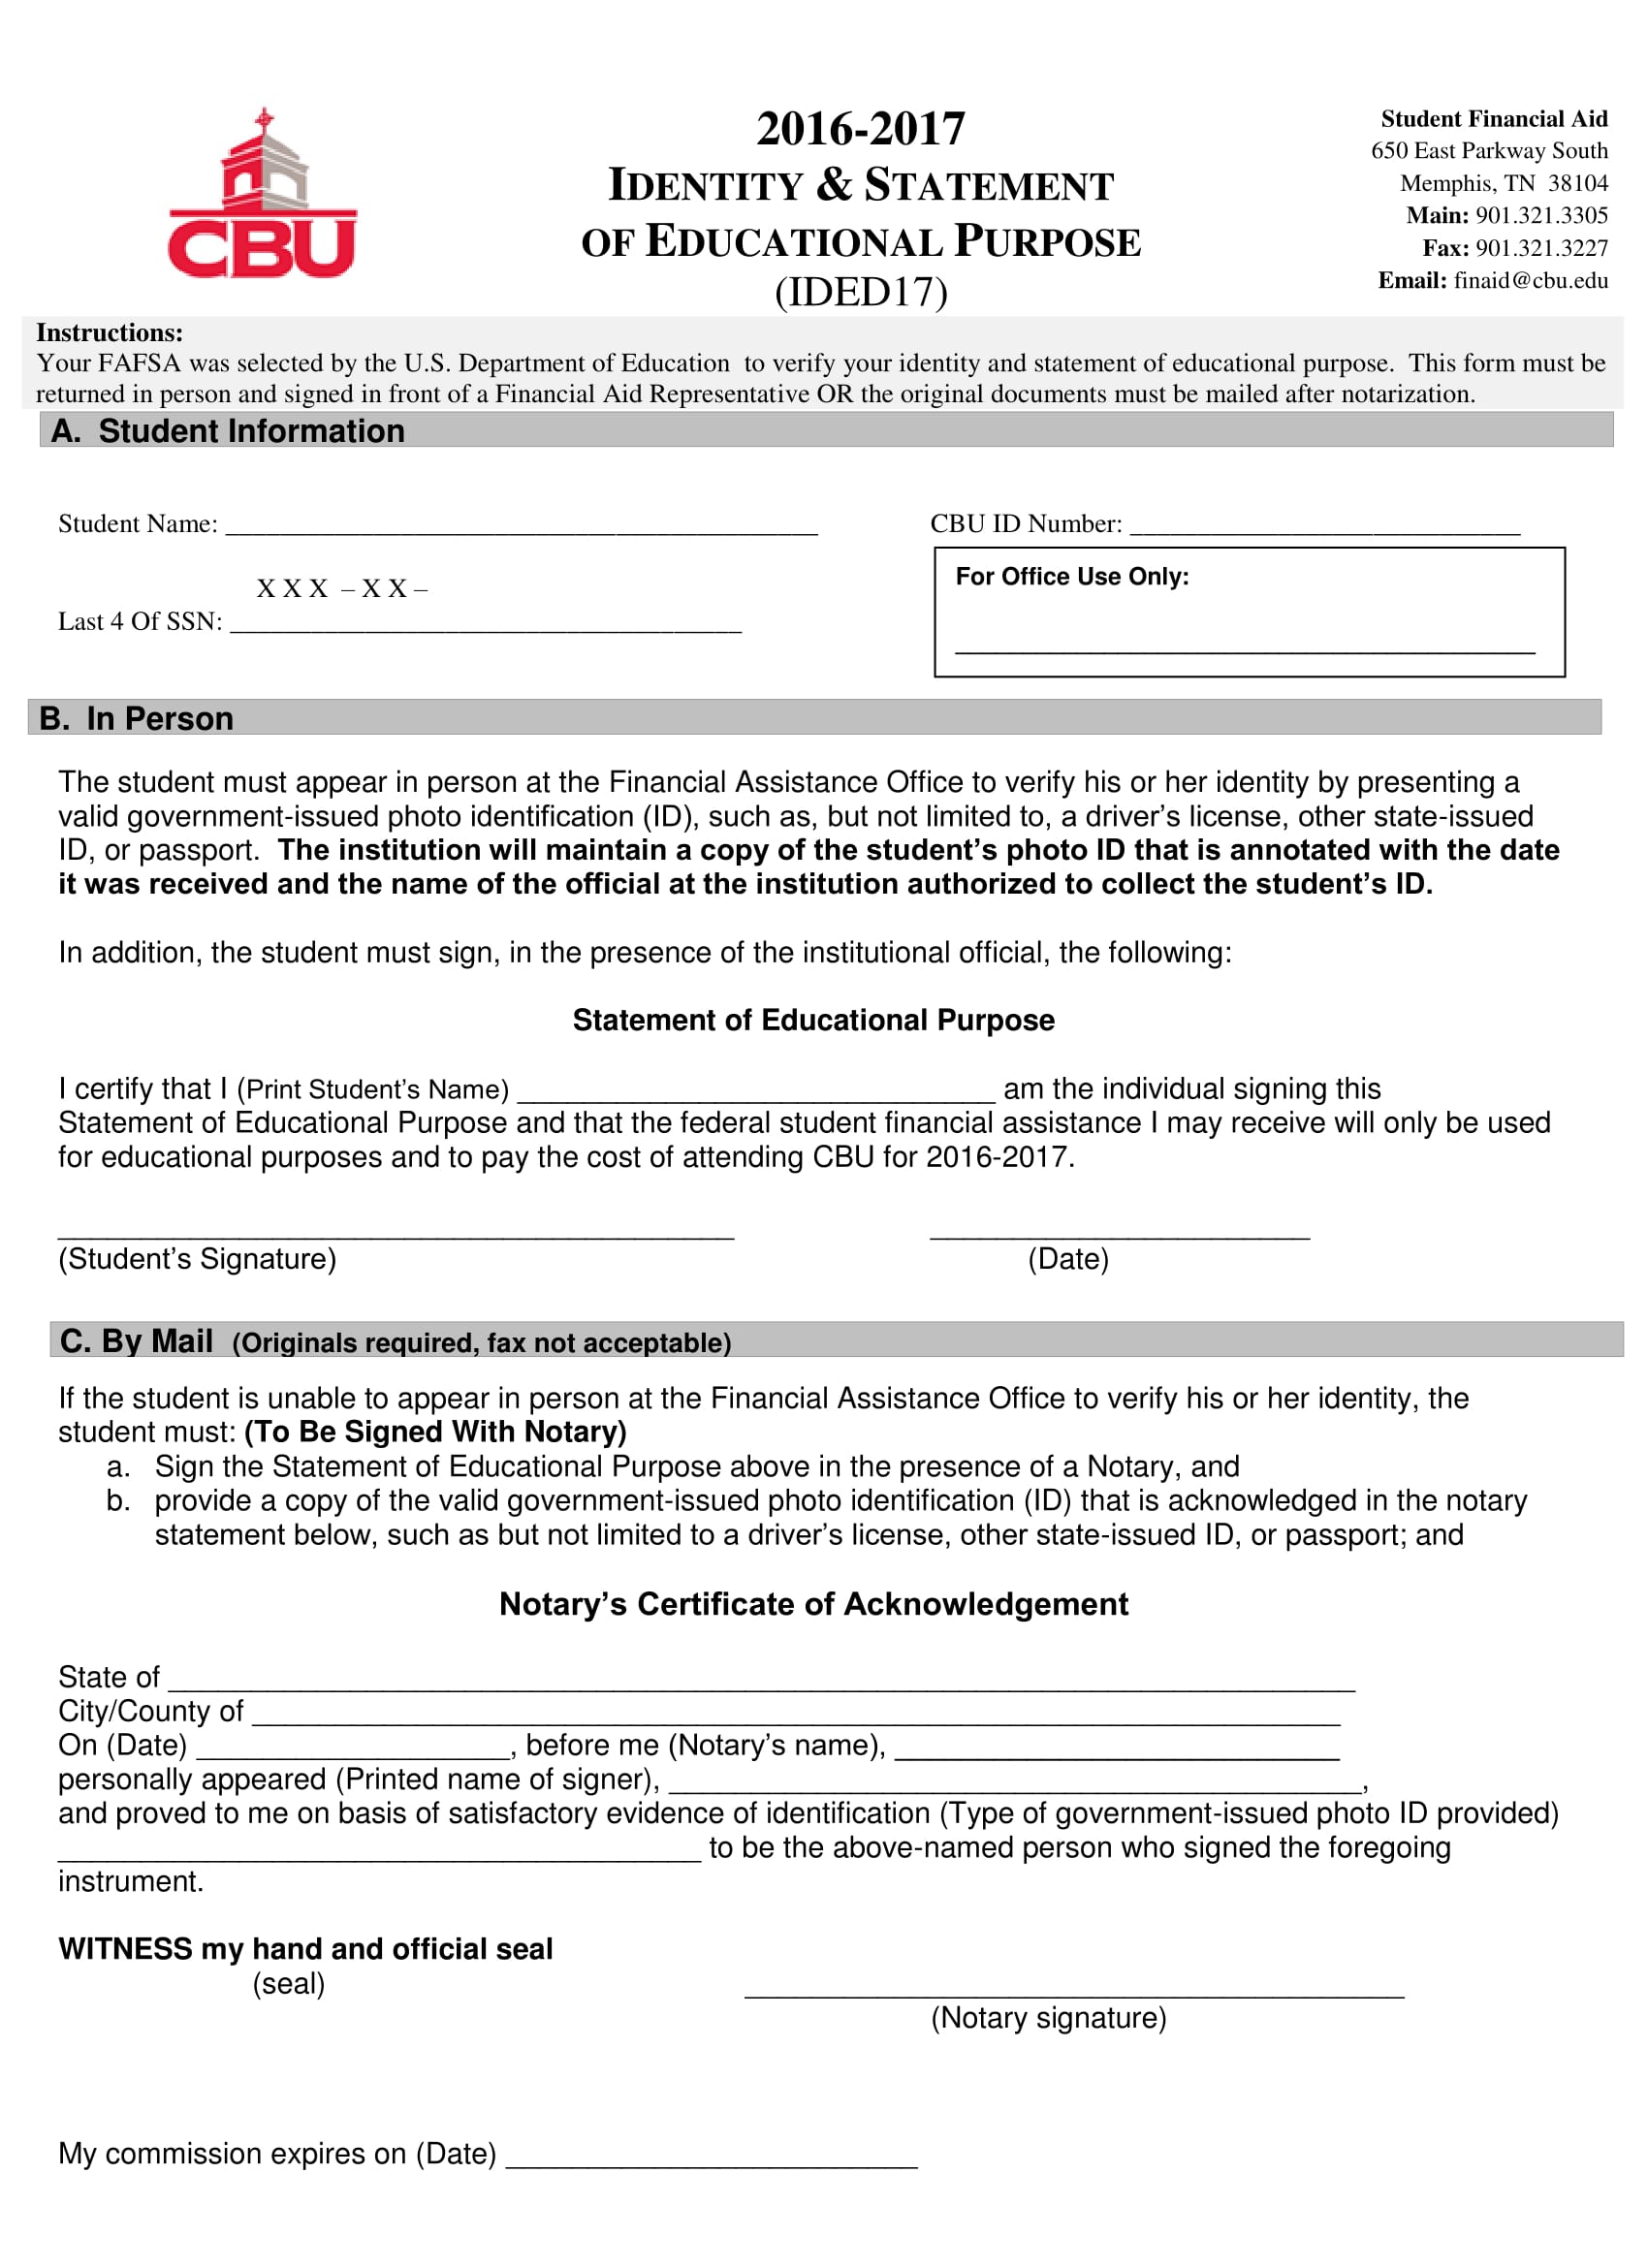 notarized verification statement form 1